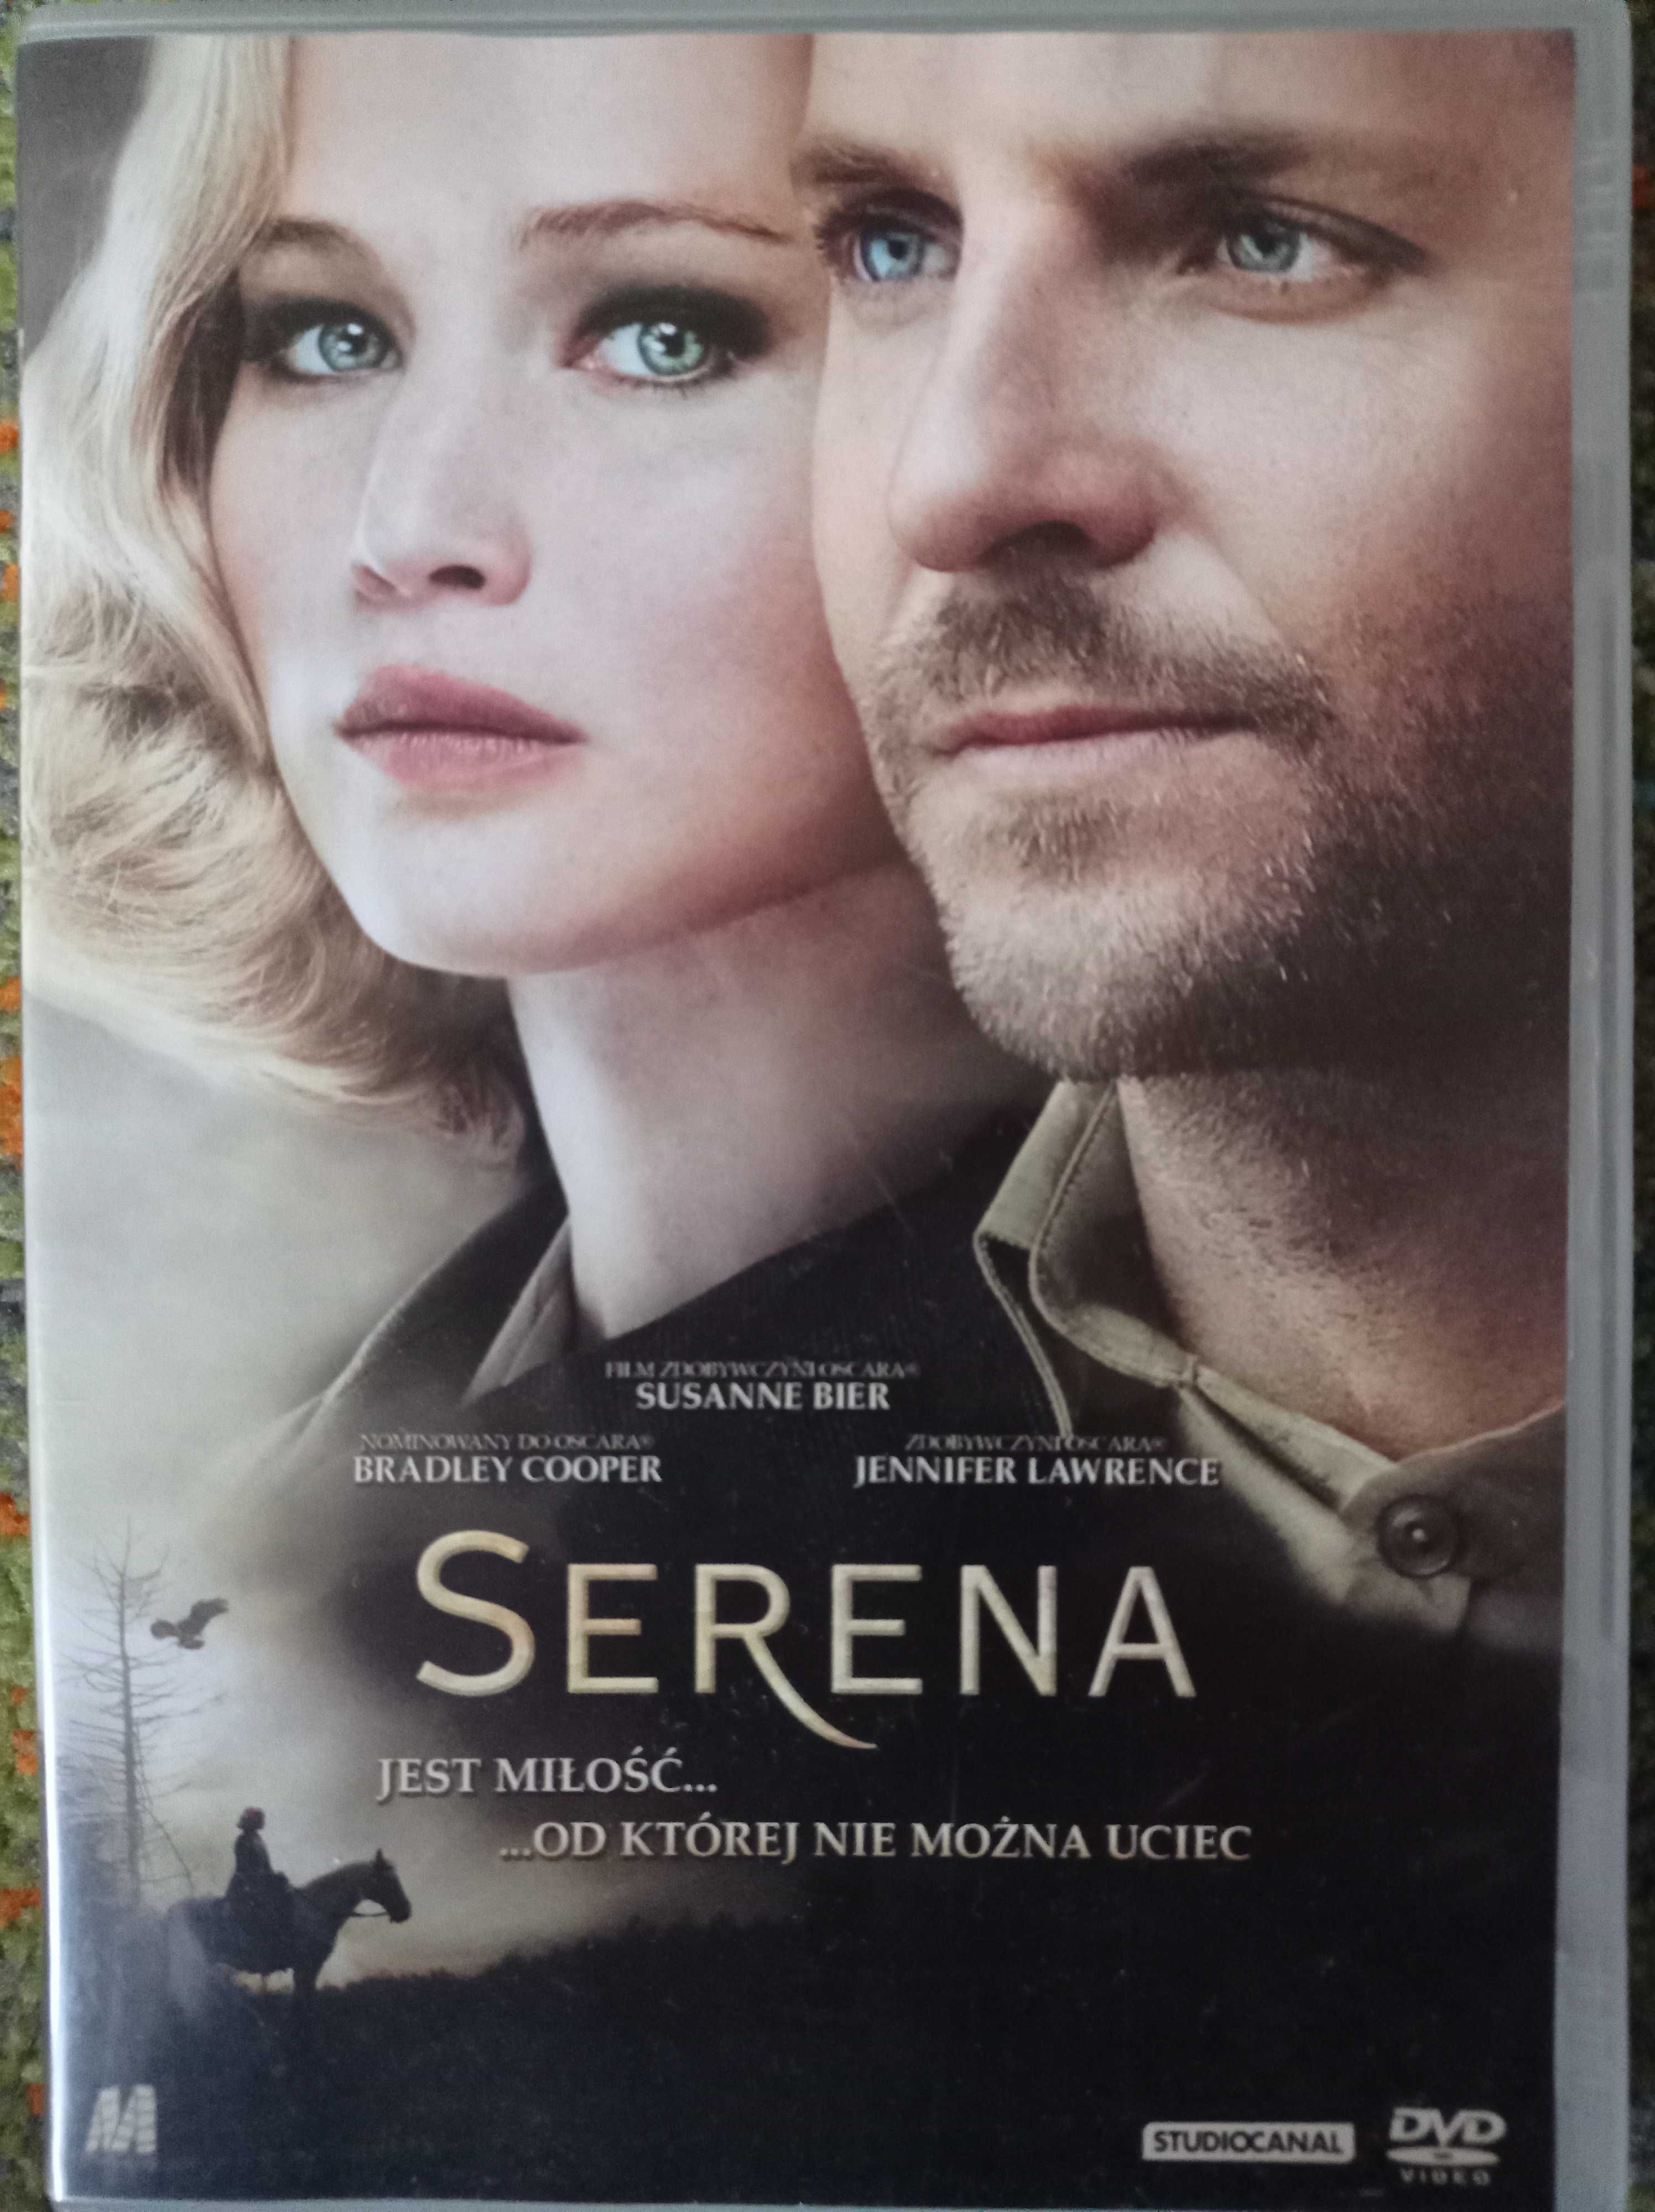 Film "Serena", Bradley Cooper